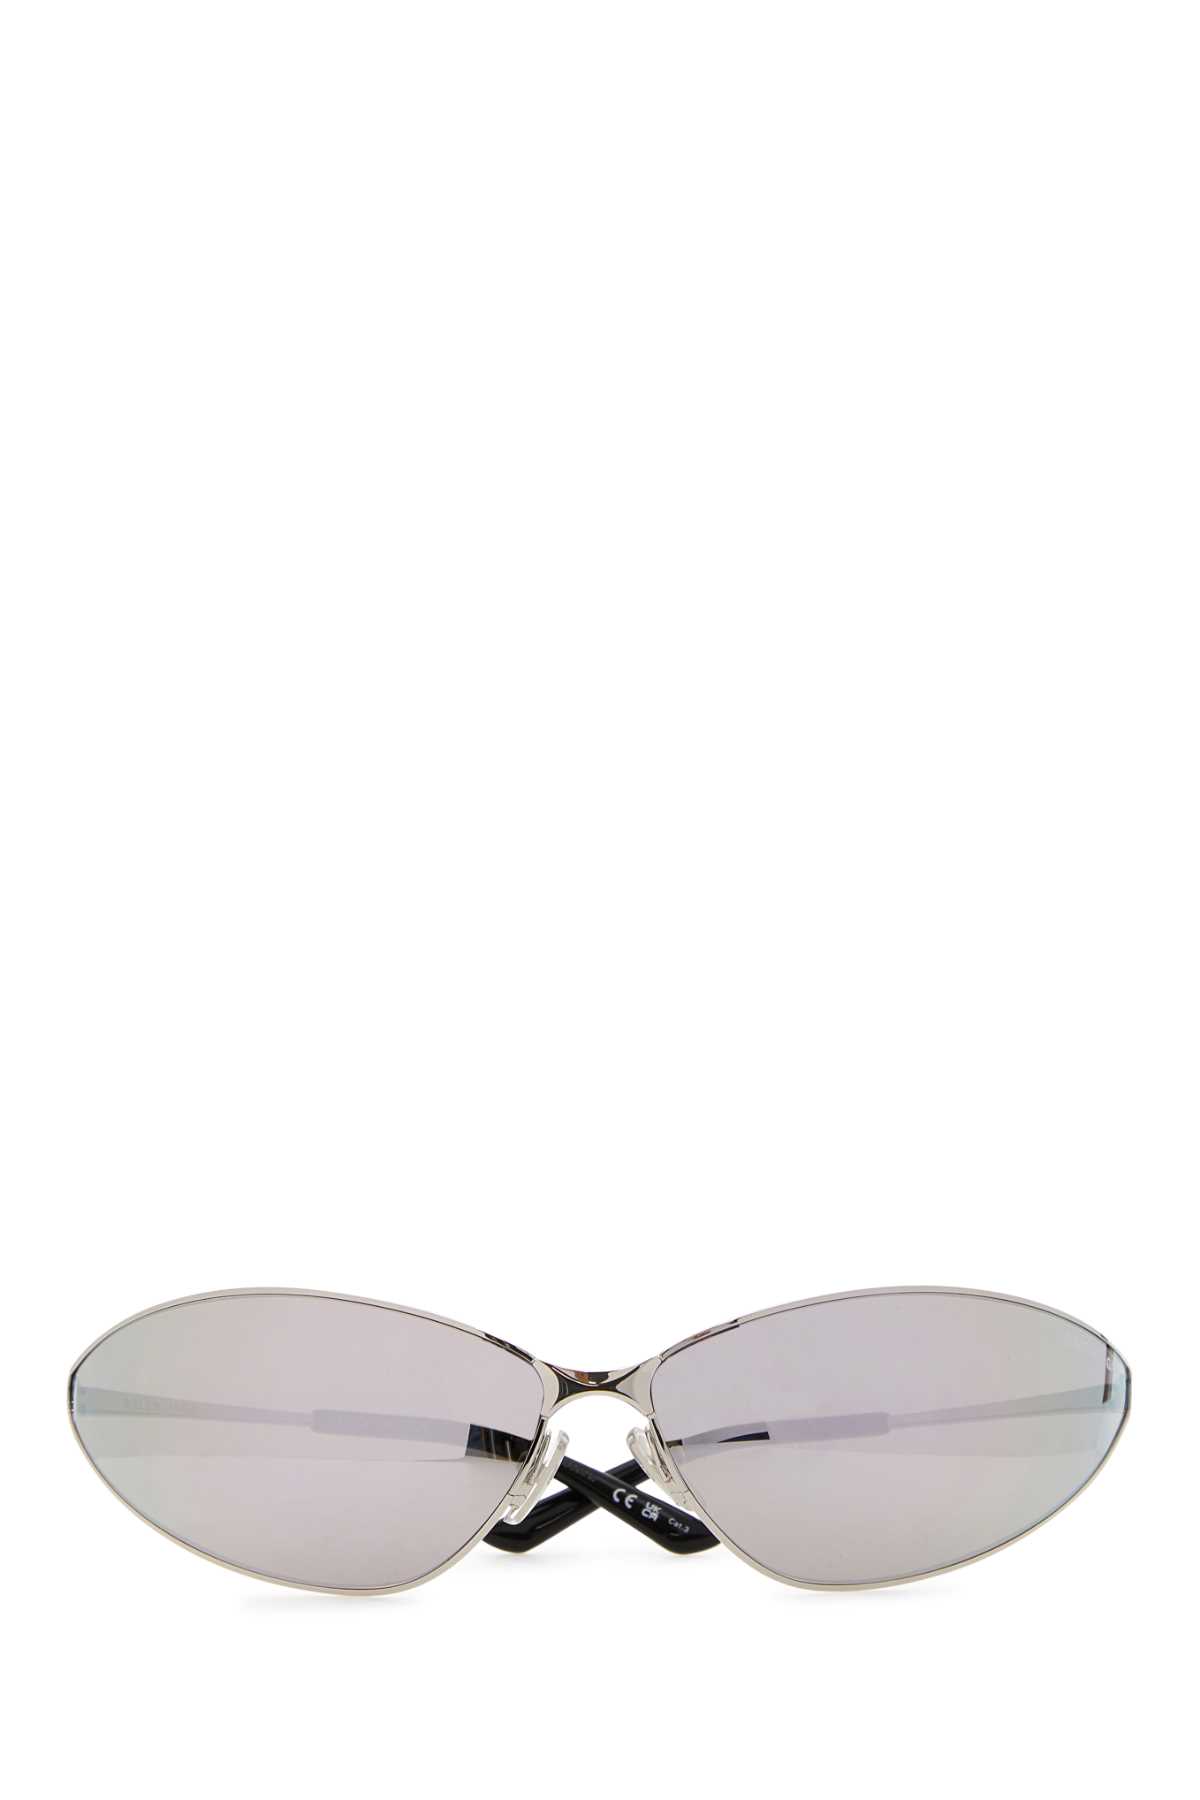 Shop Balenciaga Silver Metal Razor Sunglasses